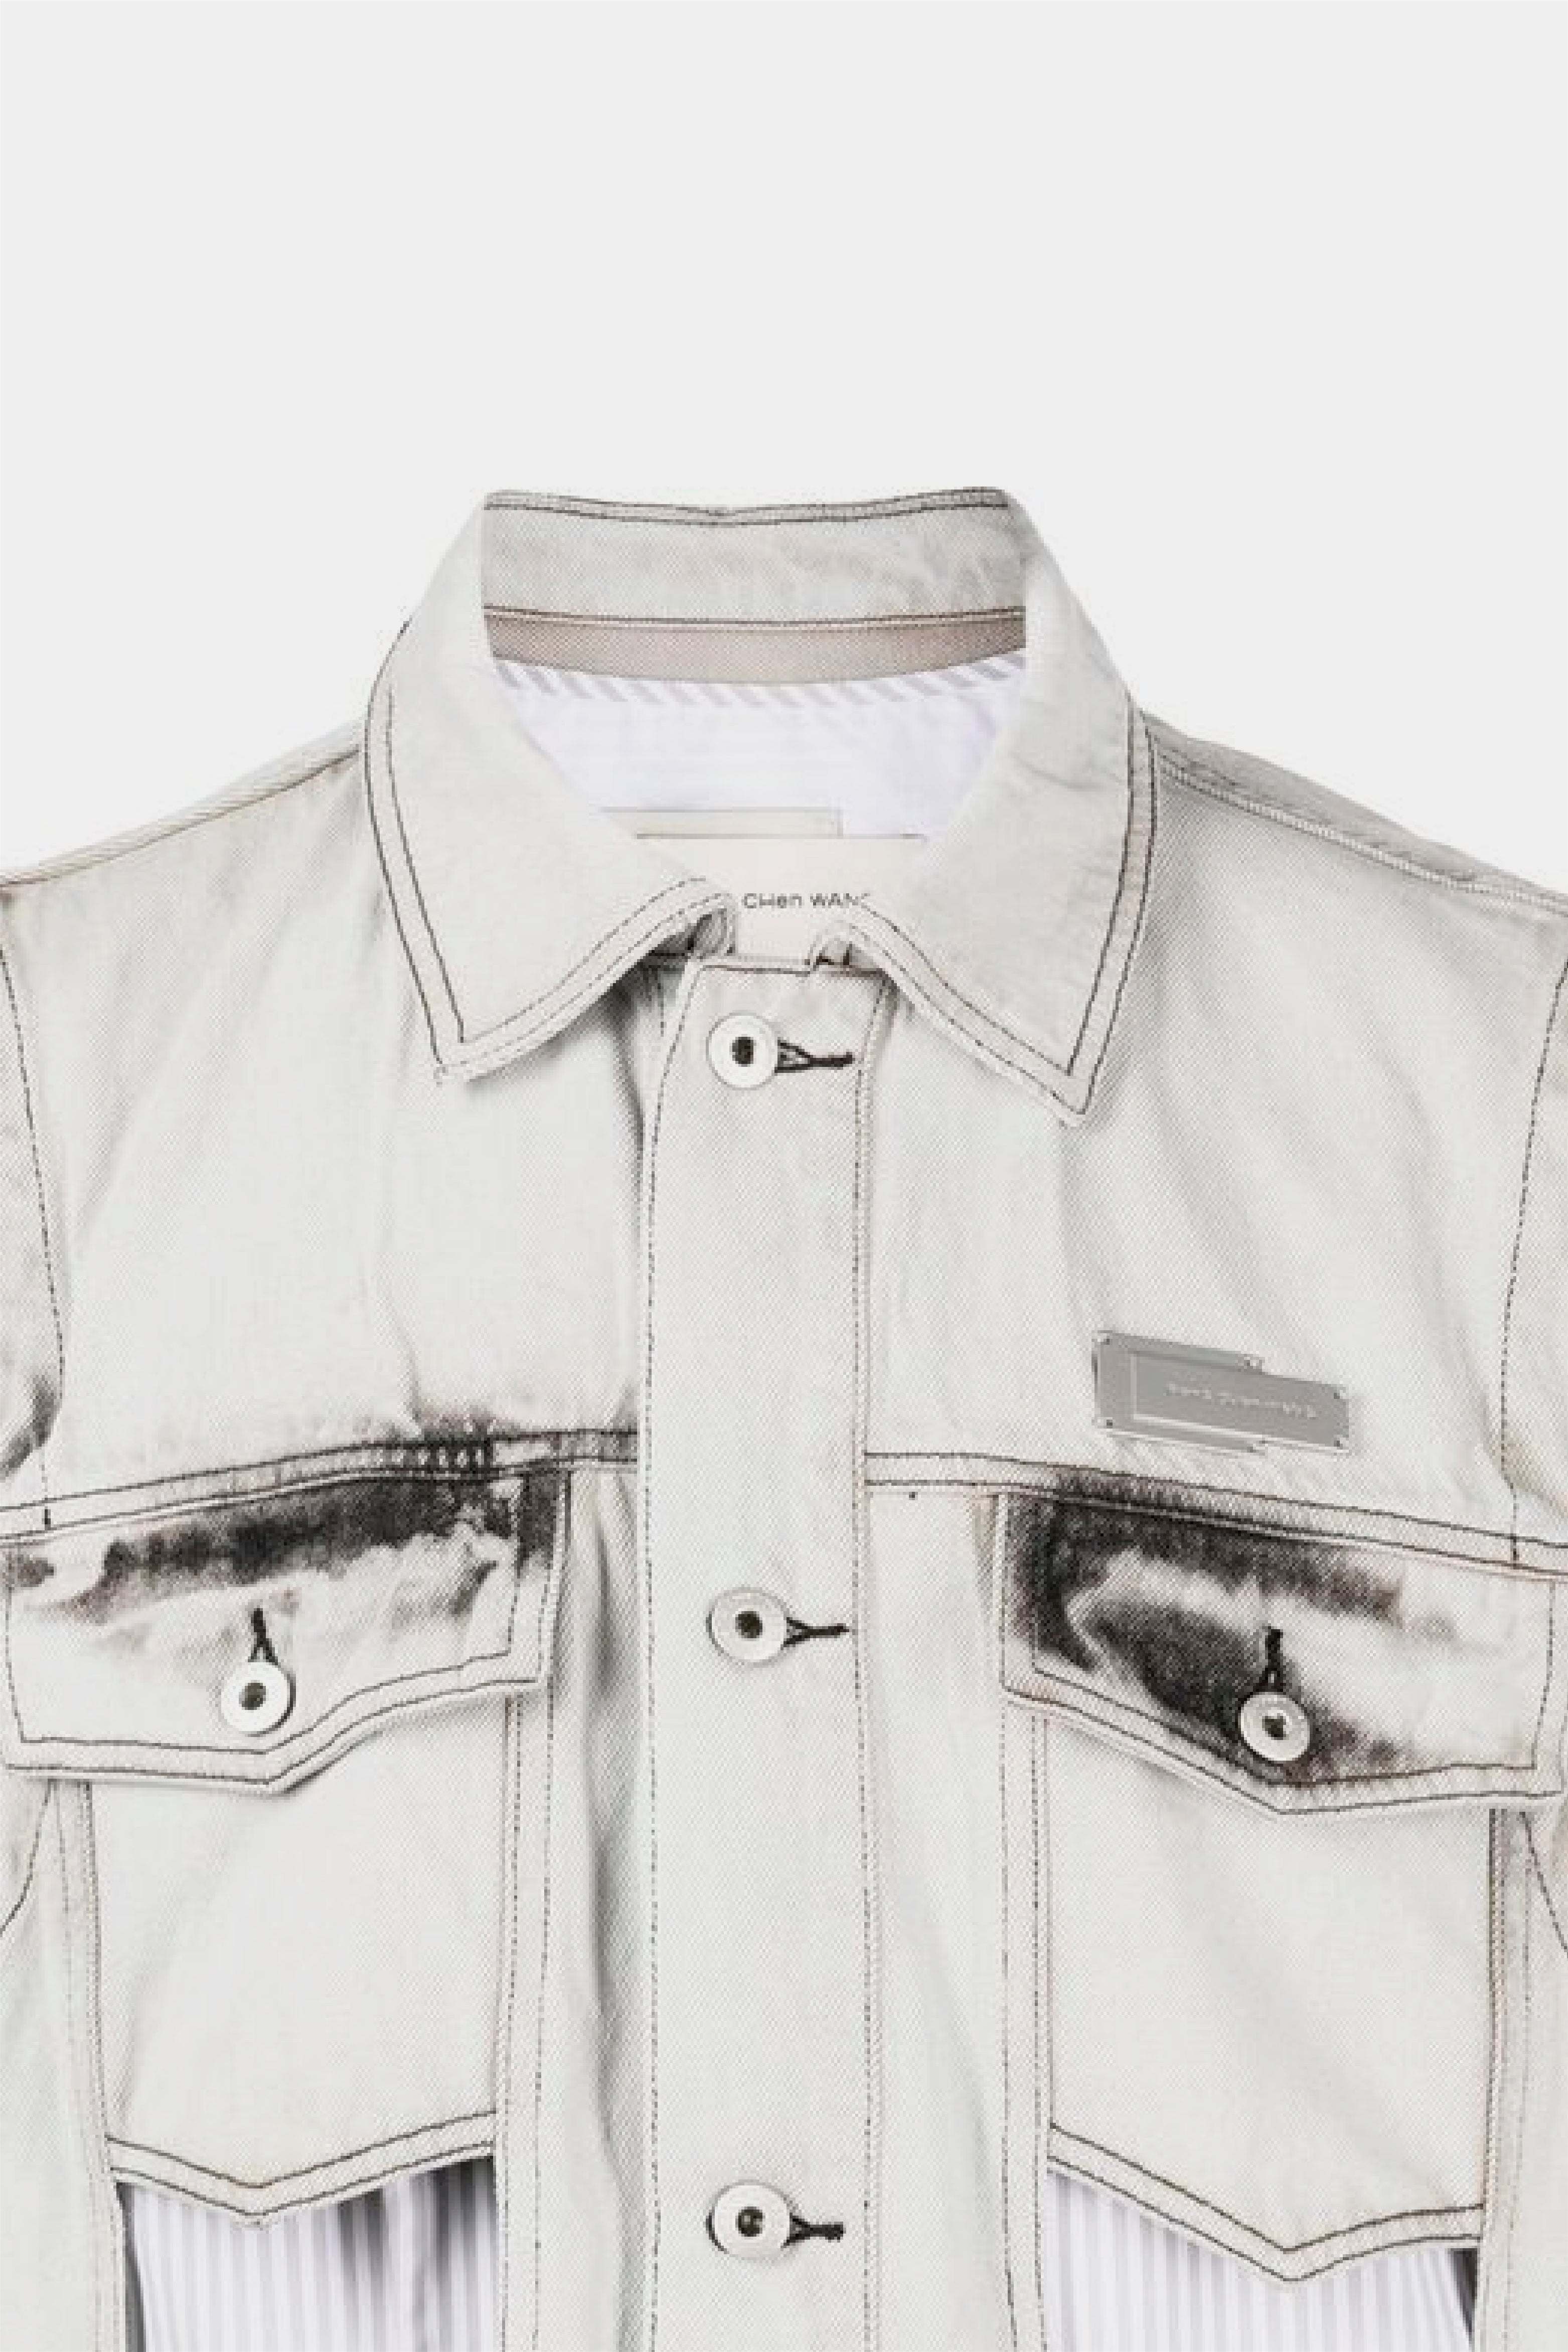 Selectshop FRAME - FENG CHEN WANG 2 in 1 Denim Jacket Outerwear Concept Store Dubai